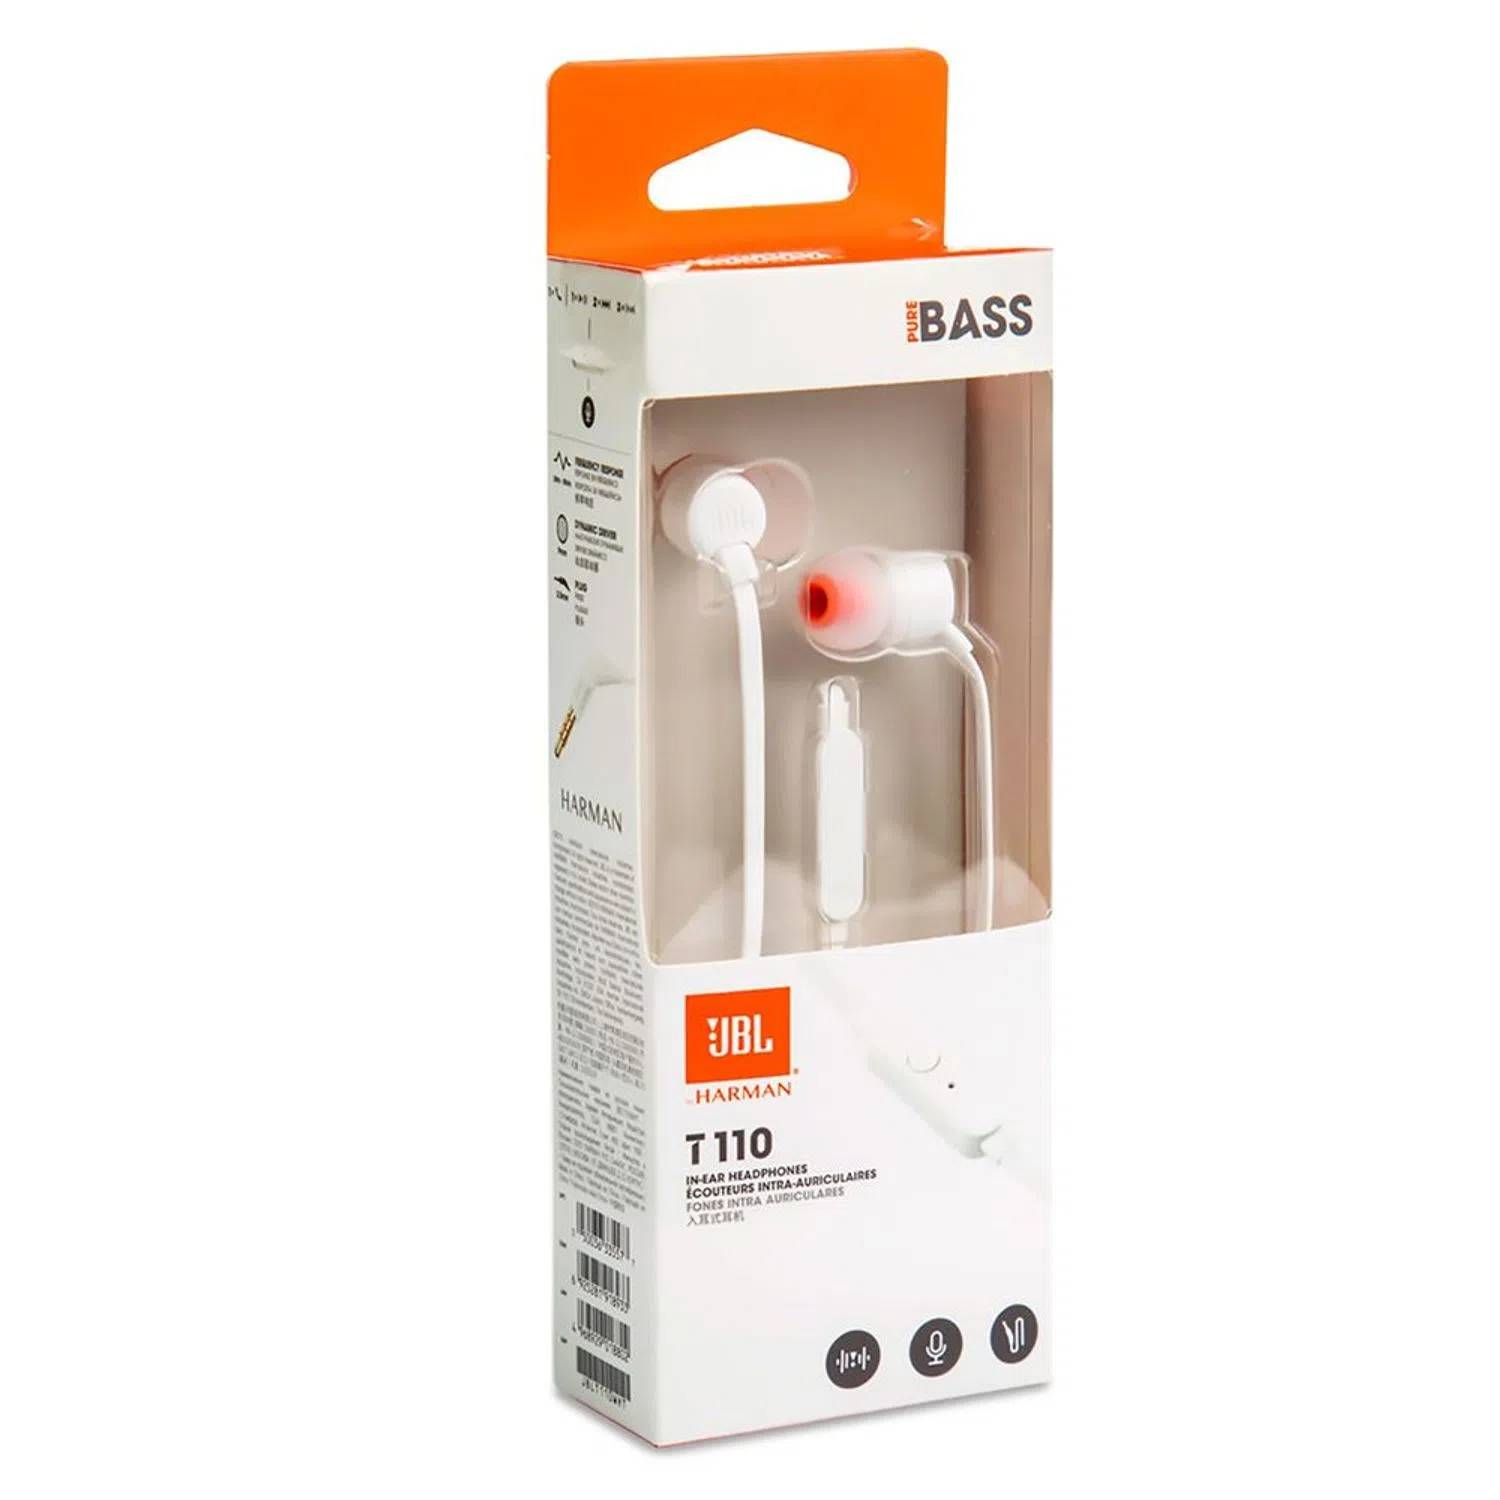 JBL T110 3.5mm Wired Earphones Stereo Music Deep Bass Earbuds